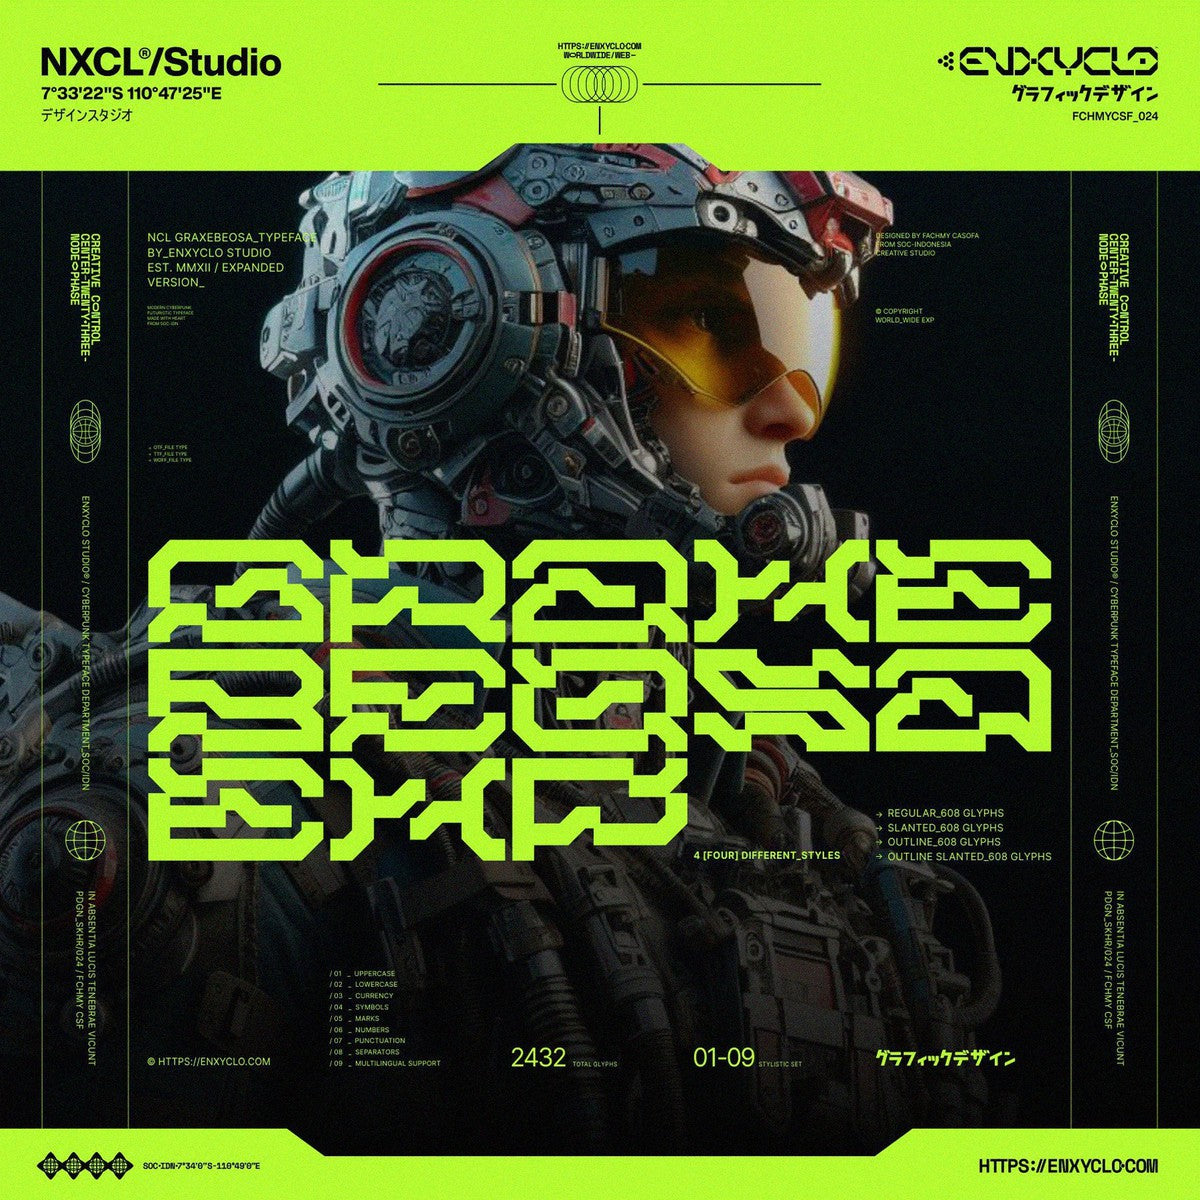 NCL Graxebeosa Expanded - Cyberpunk Futuristic Techno Mecha Font